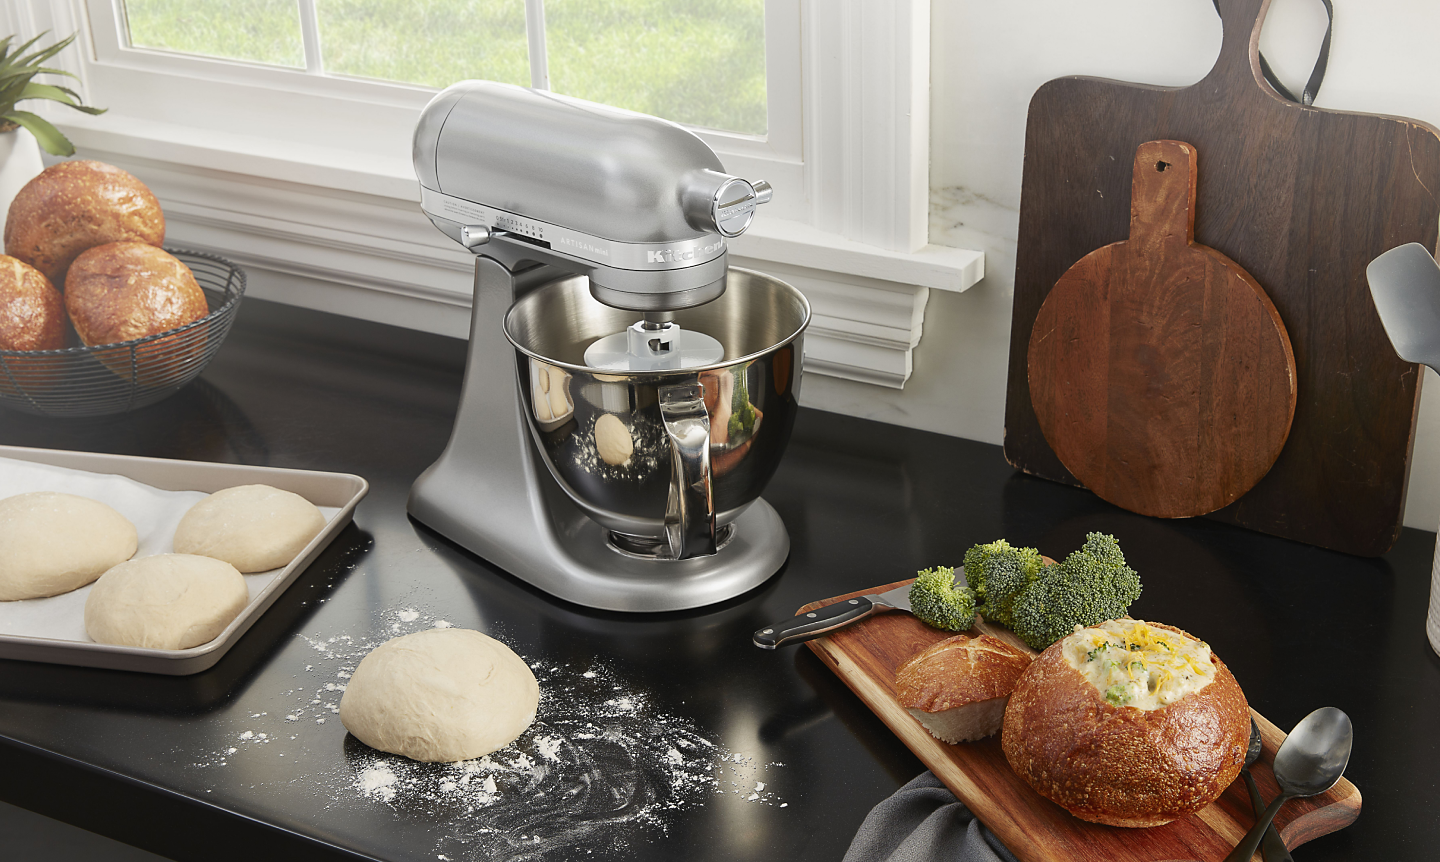 KitchenAid® stand mixer making dough for bread bowls